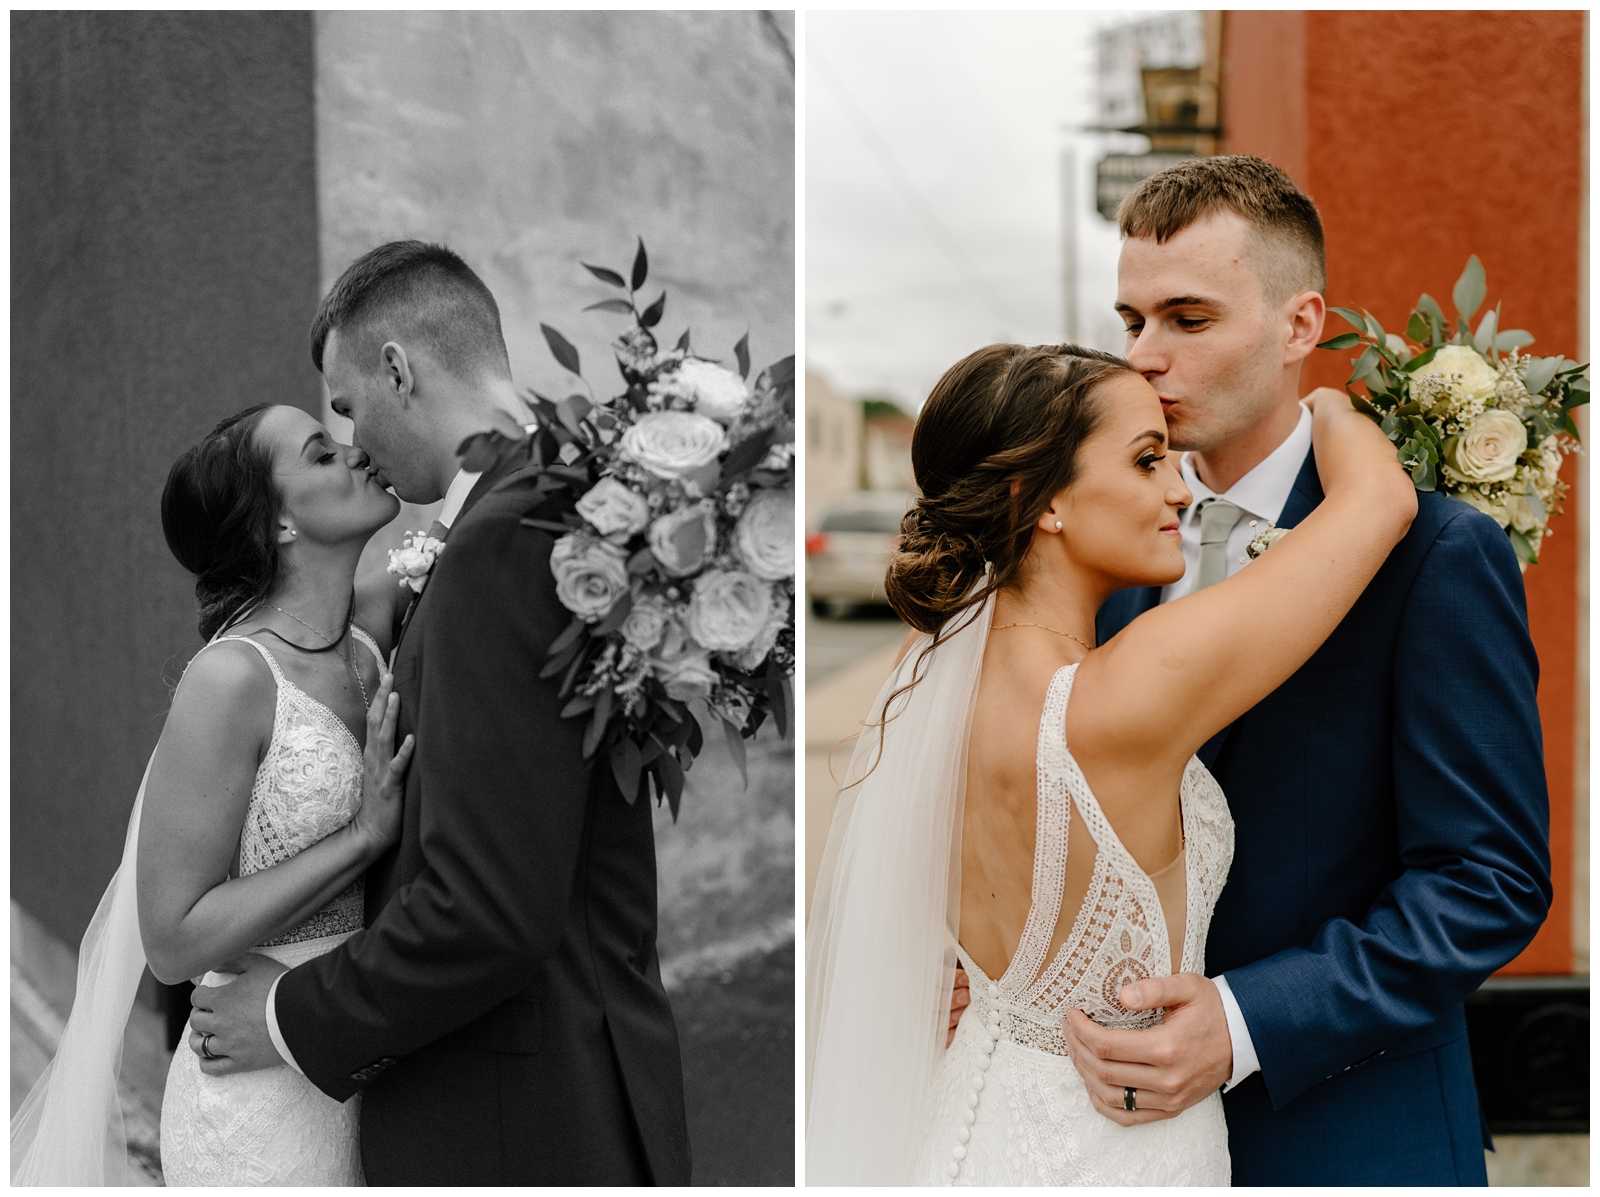 Beautiful and intimate indie vibe newlywed portraits by Winston-Salem North Carolina wedding photographer